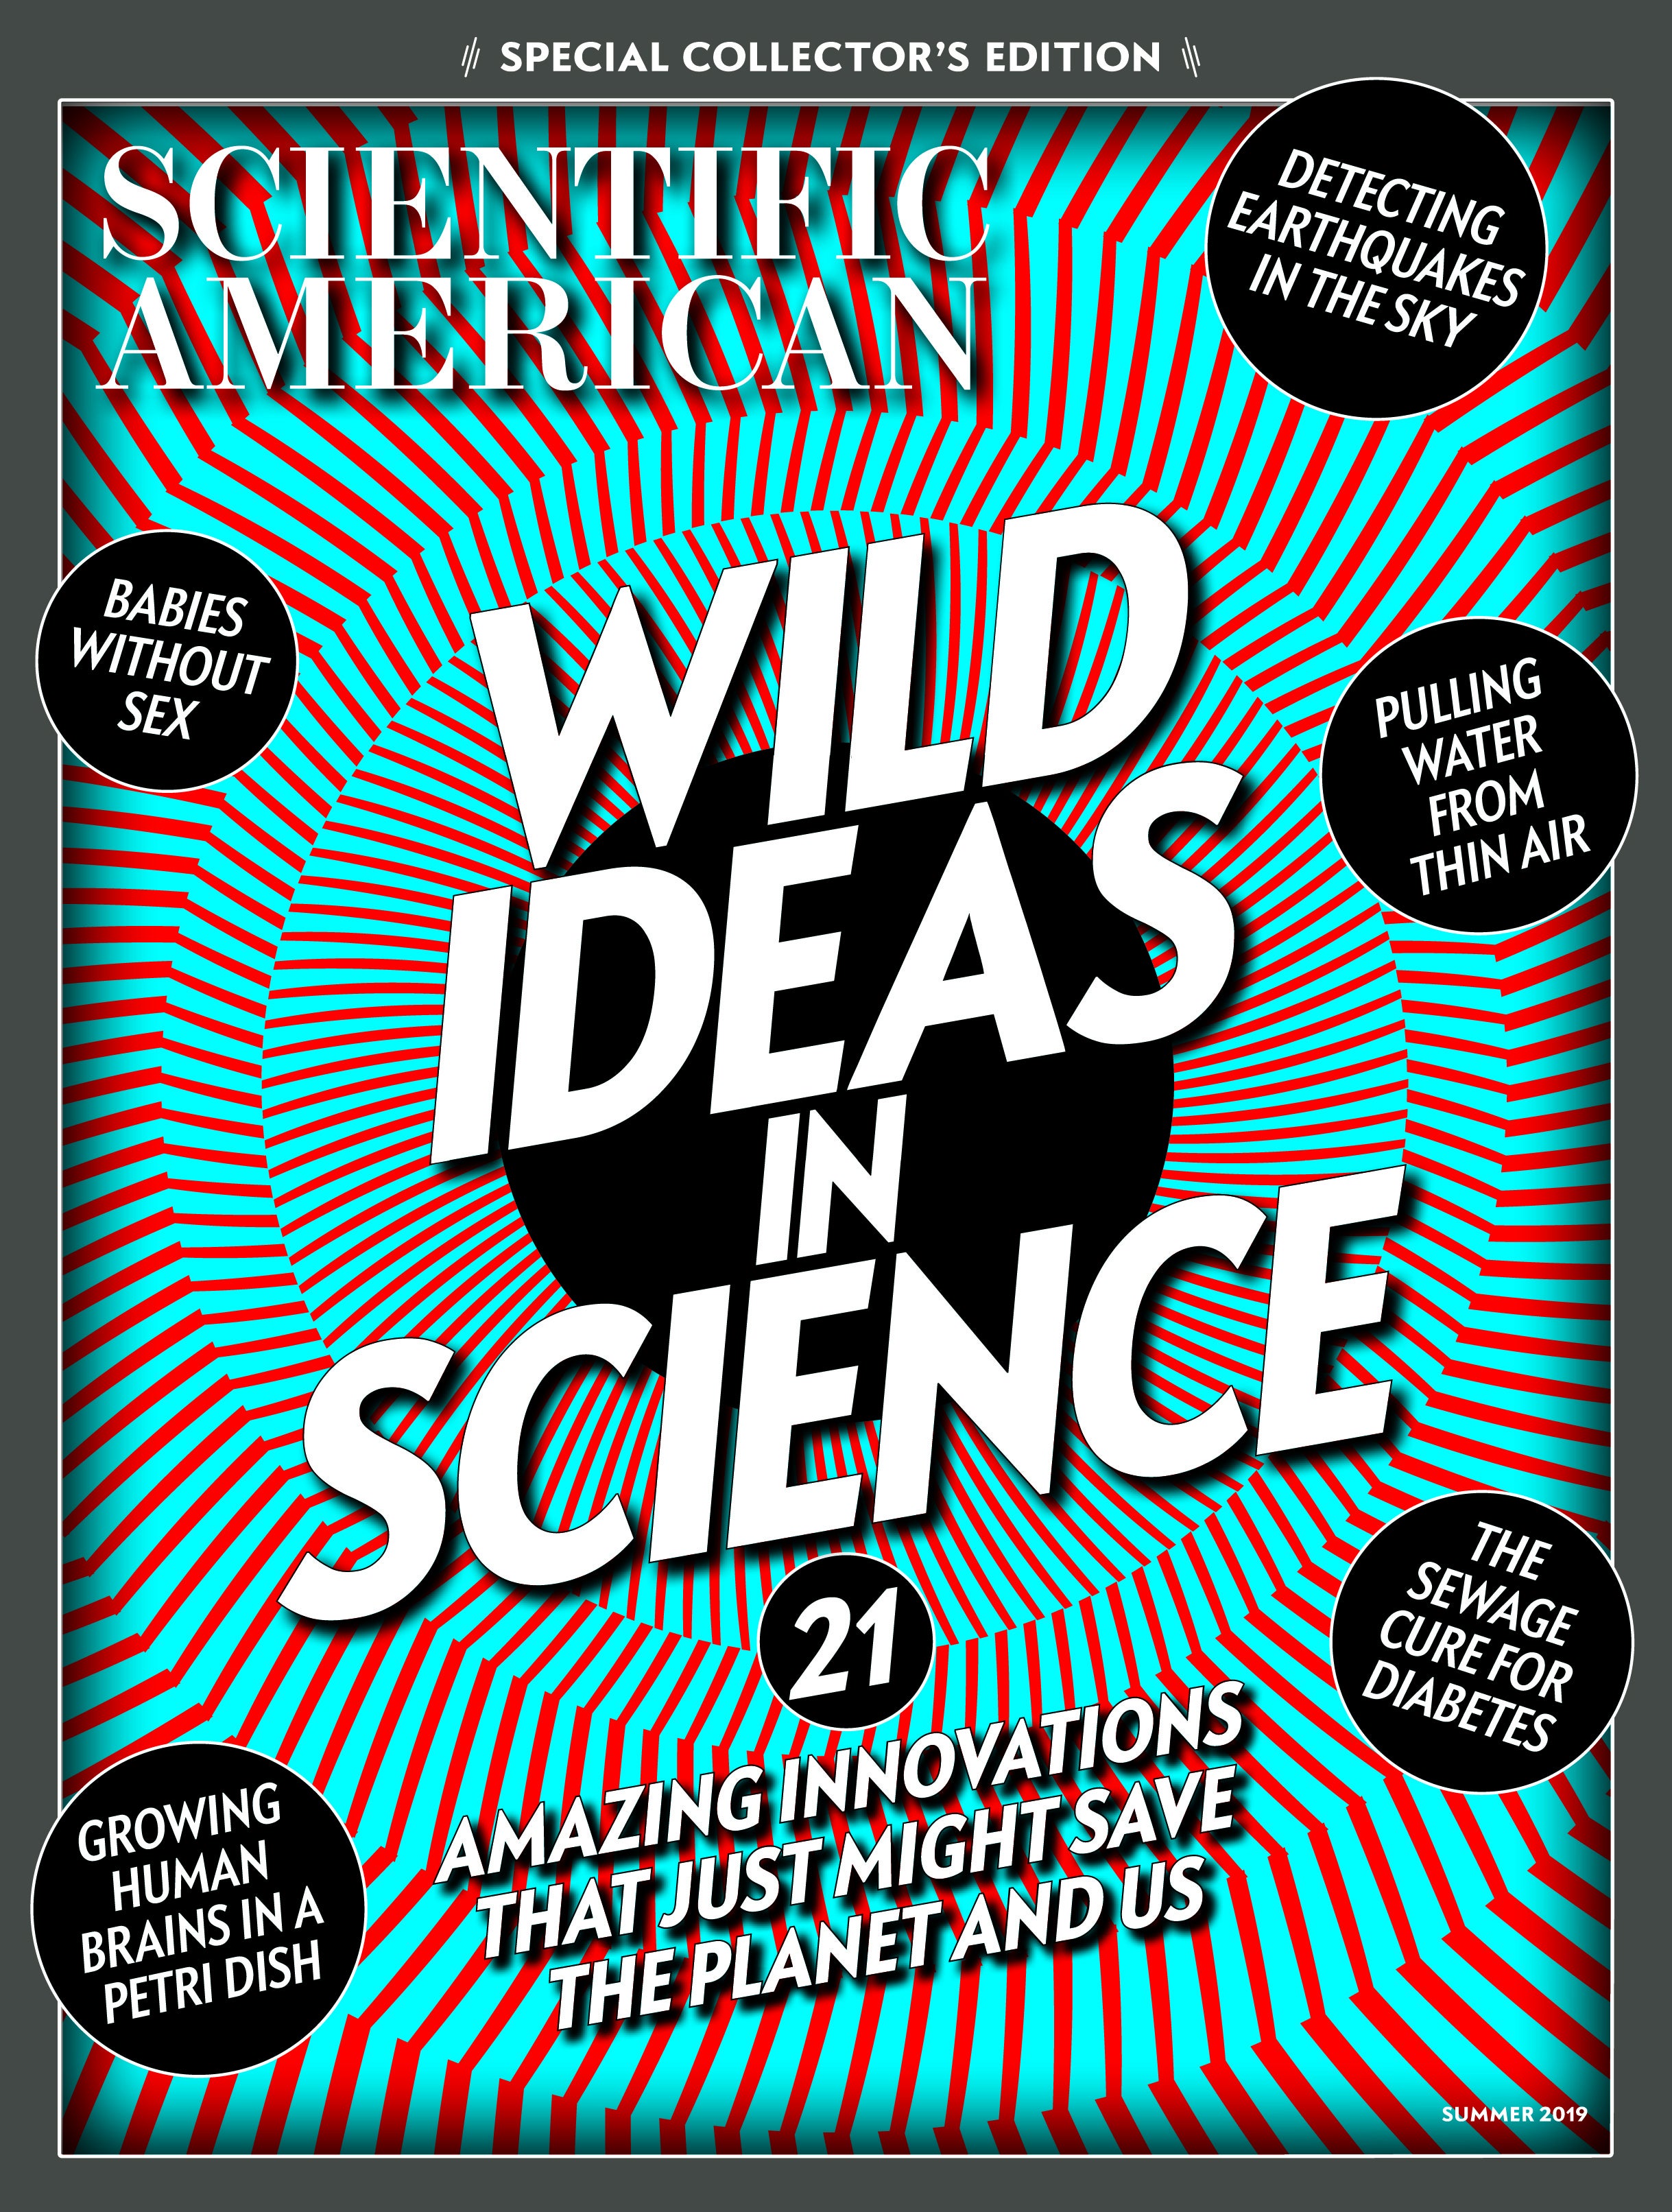 Wild Ideas in Science